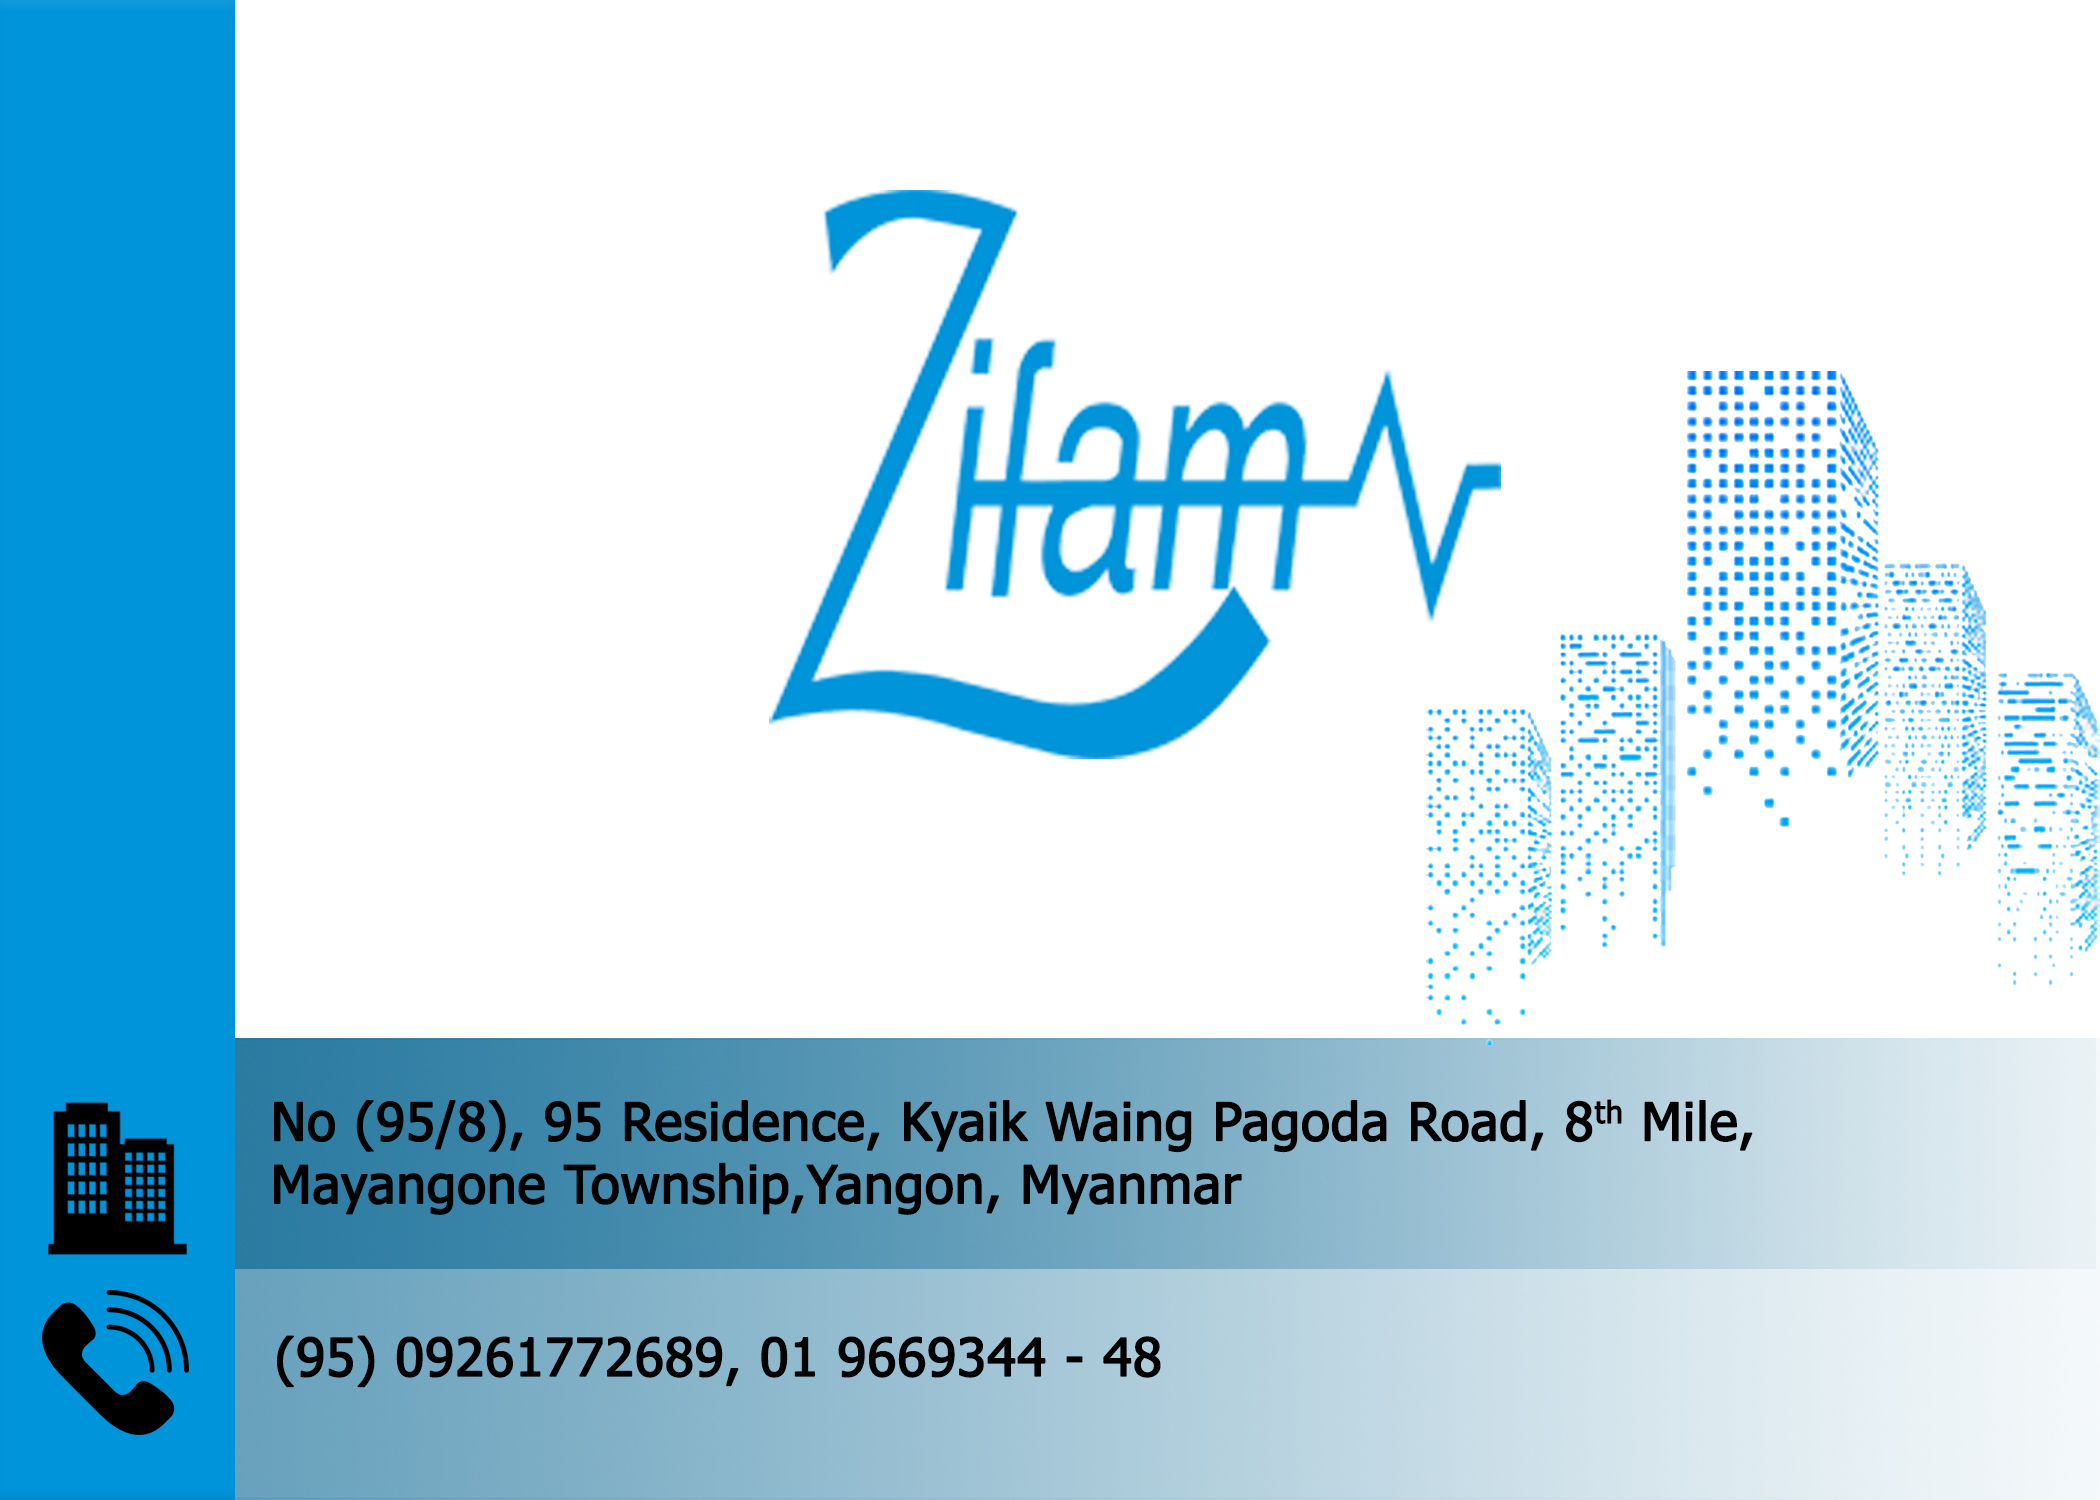 Zifam Office Address